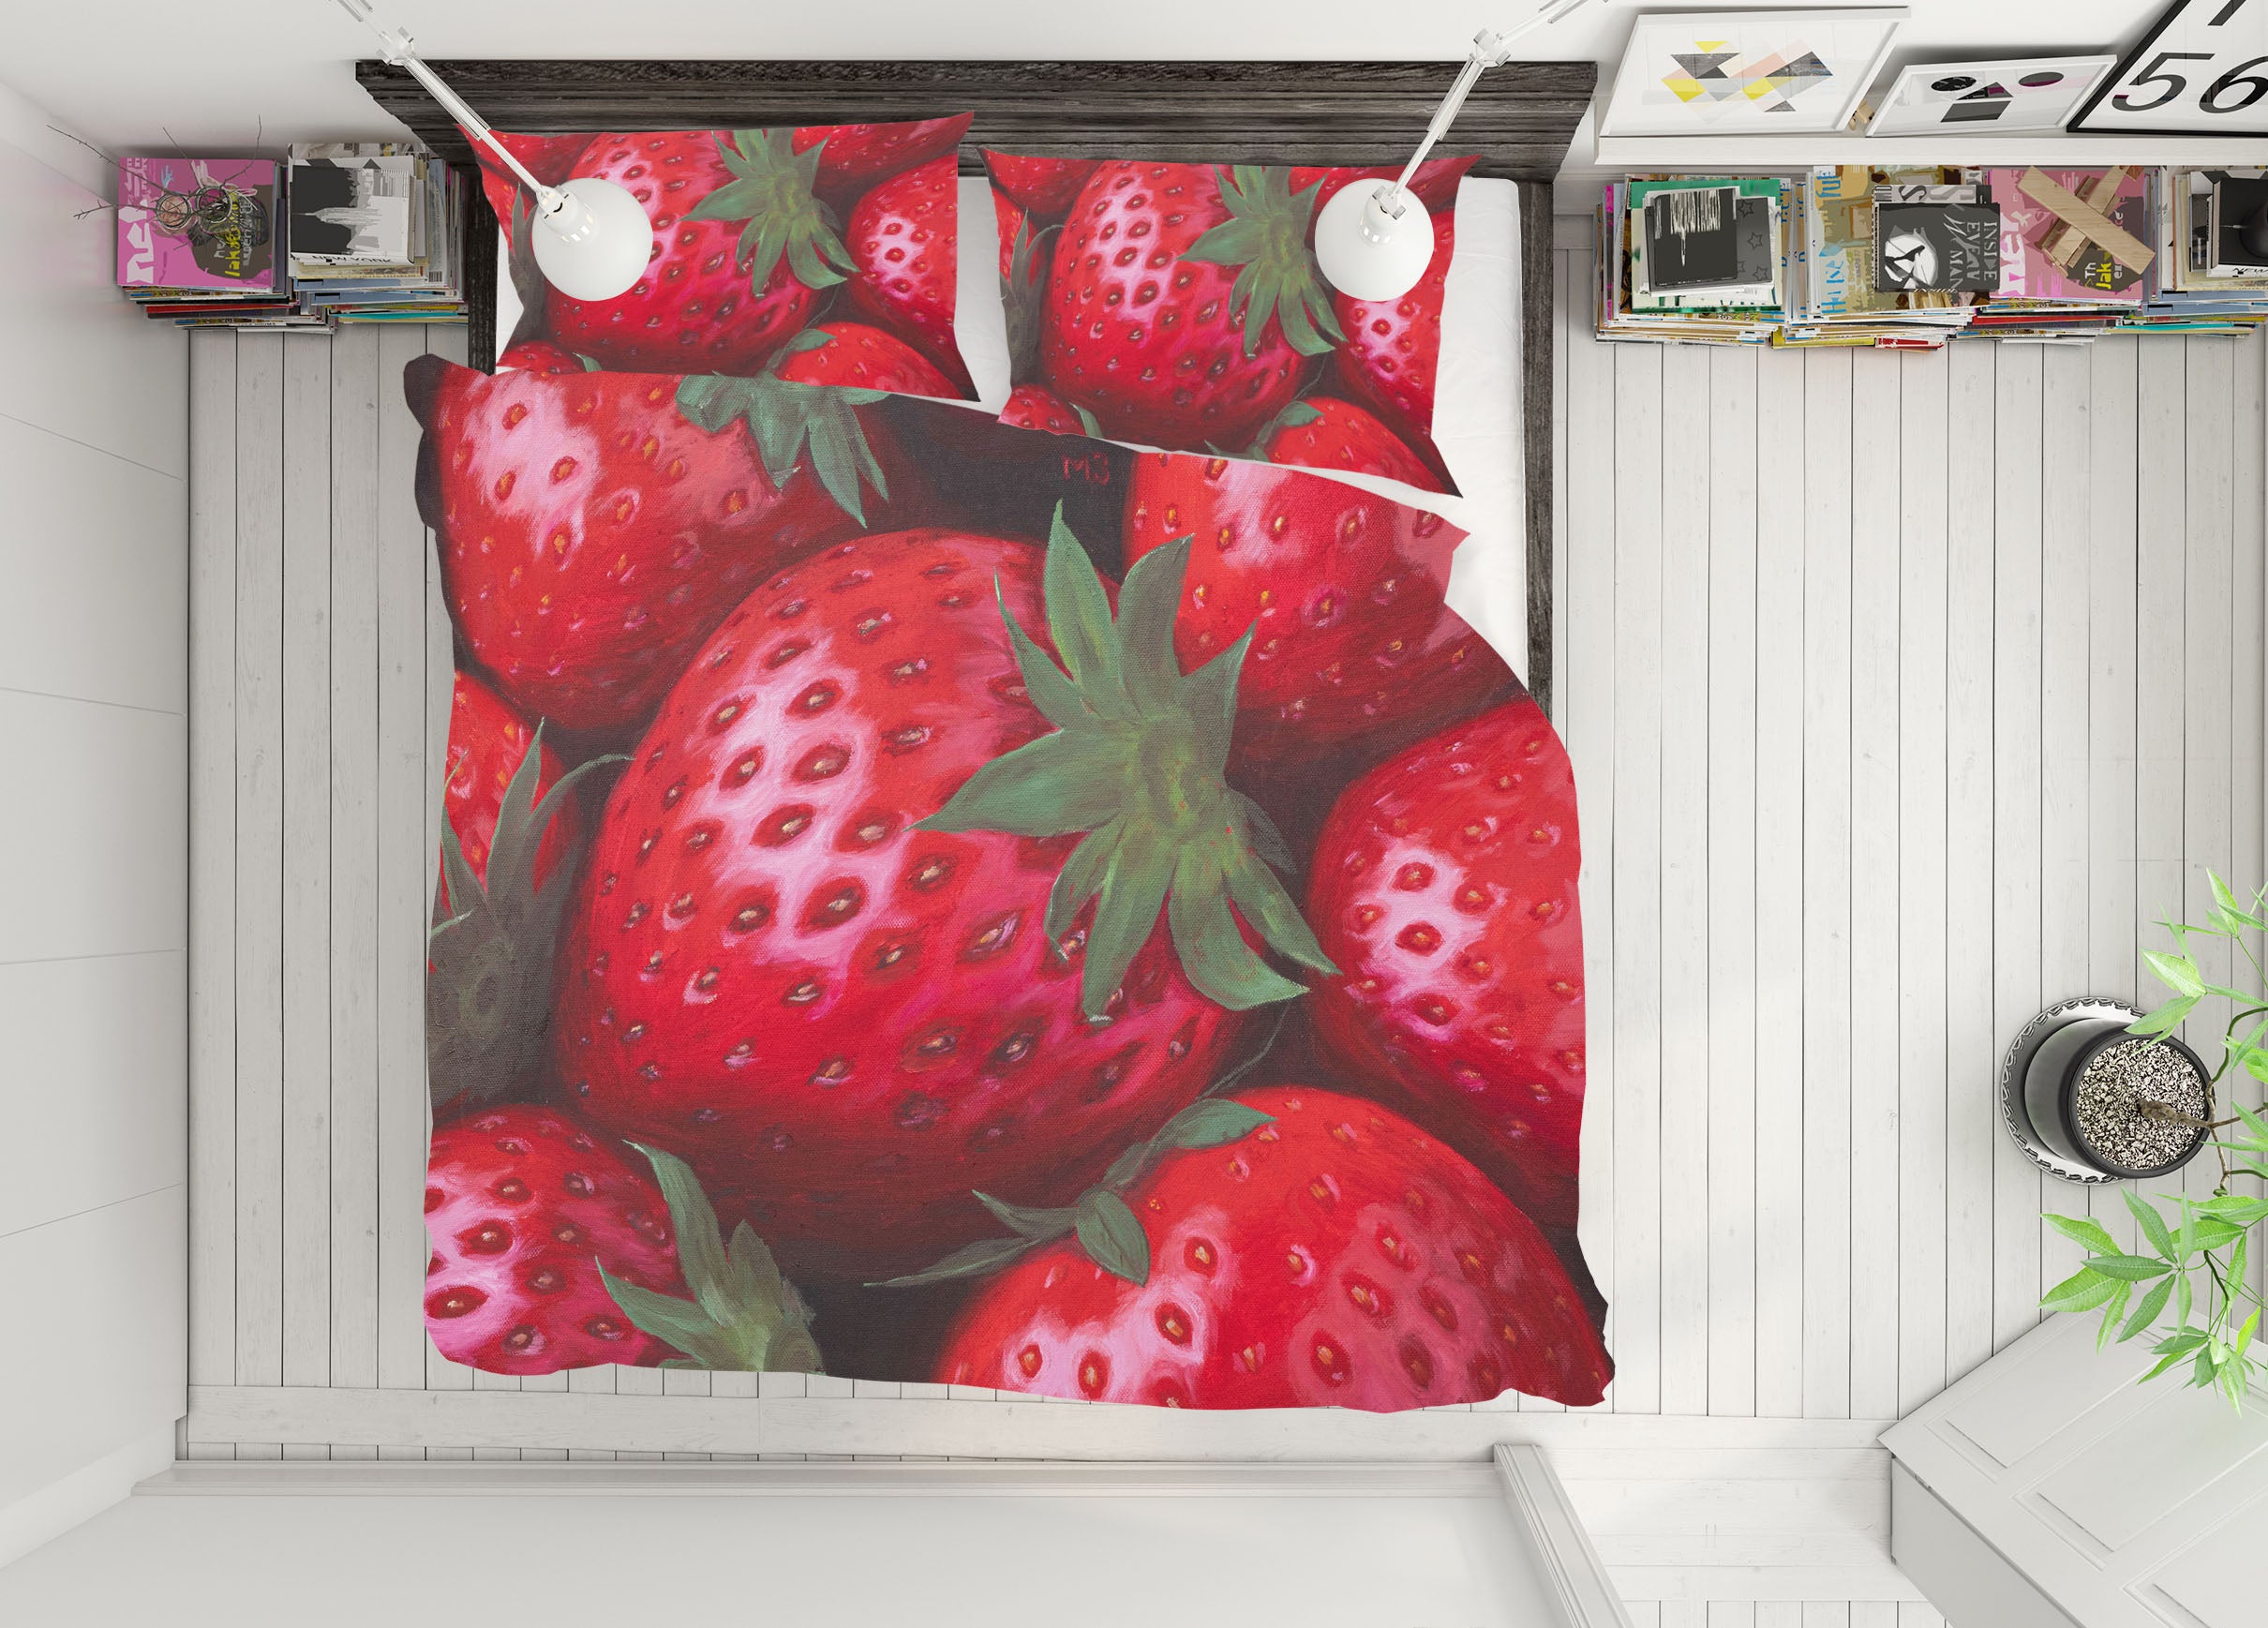 3D Strawberry 1778 Marina Zotova Bedding Bed Pillowcases Quilt